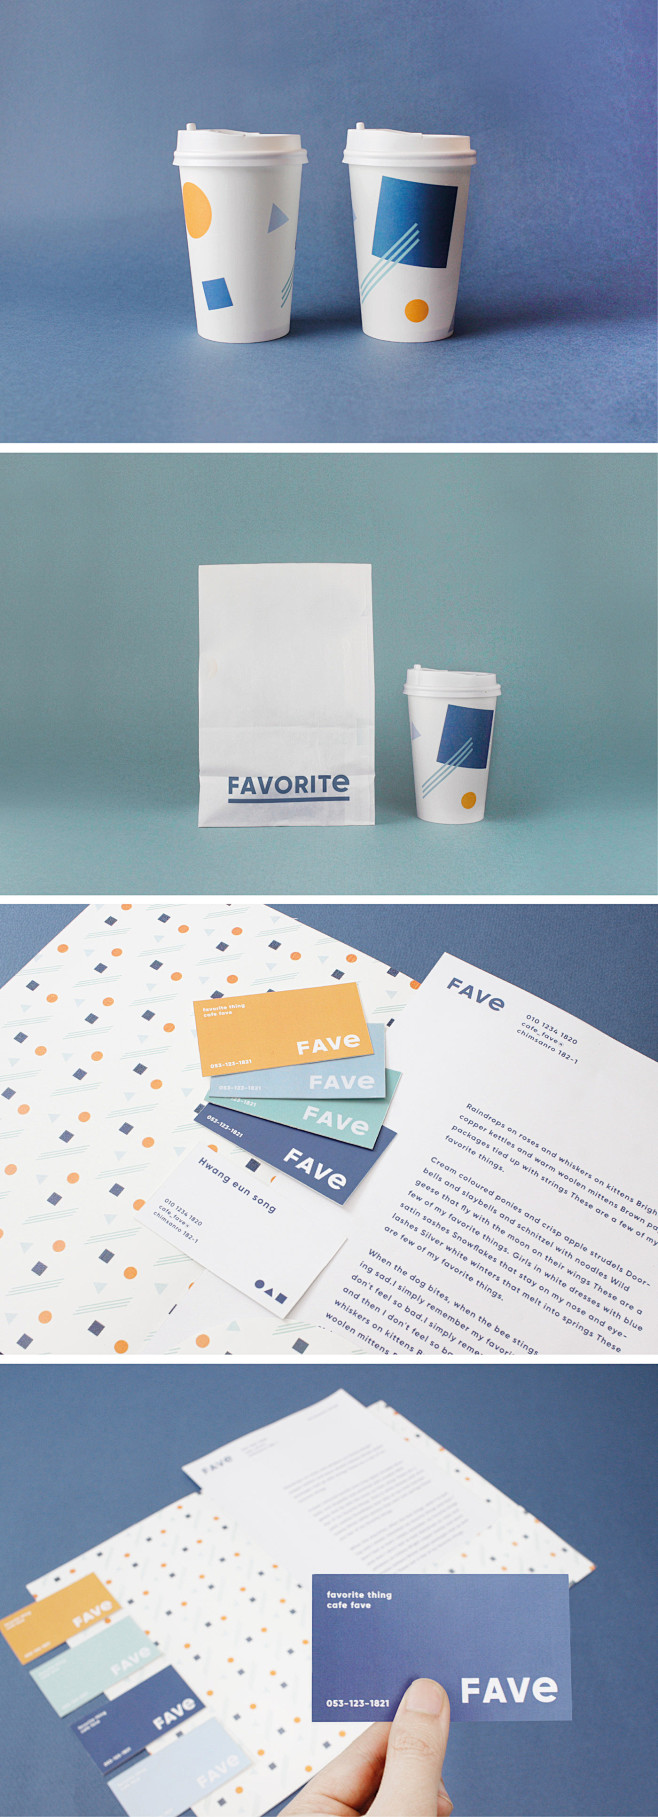 cafe fave咖啡馆品牌形象视觉设计